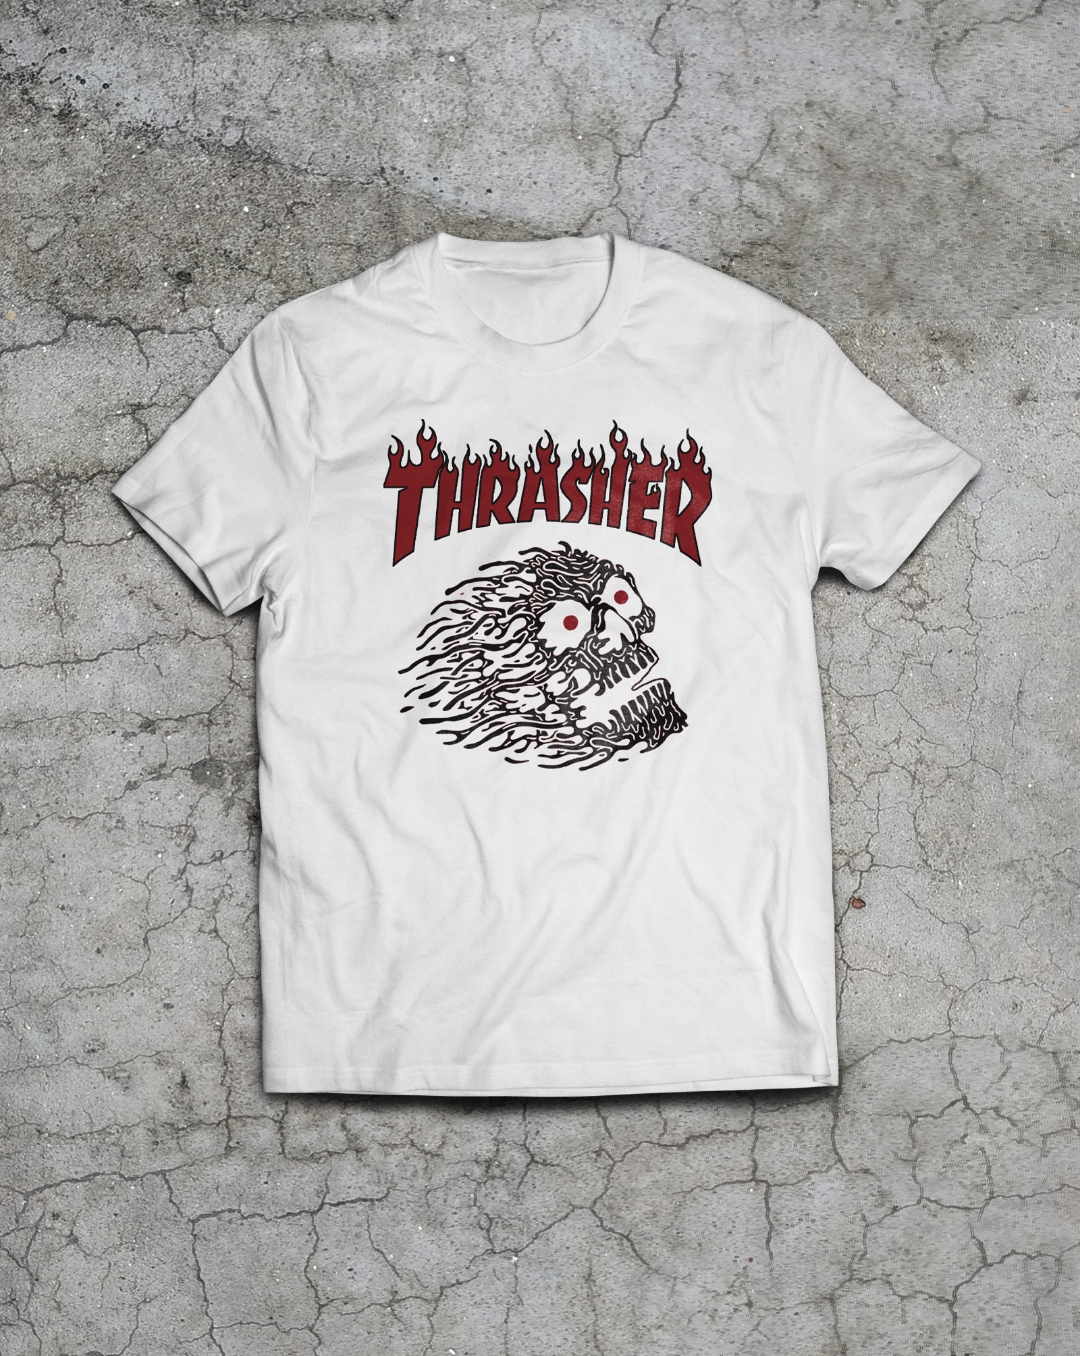 thrasher-shirt-front